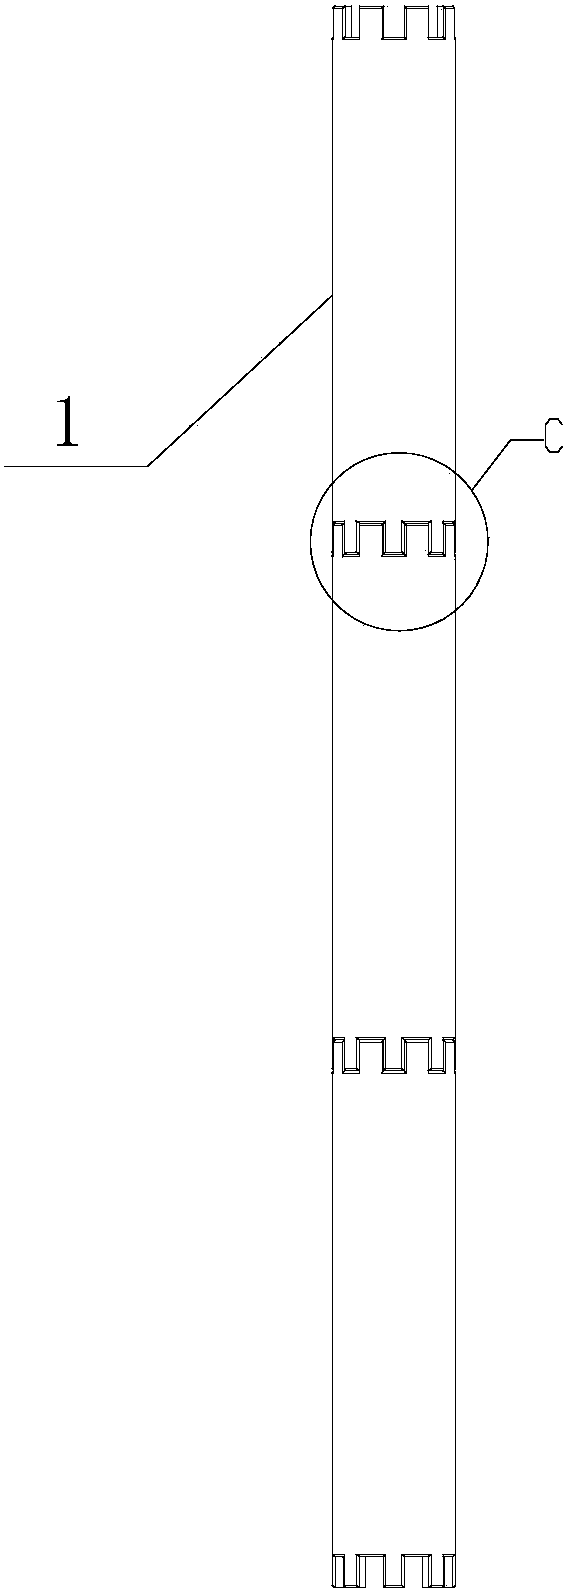 Rectangular butt-welded seam steel pipe for communication tower